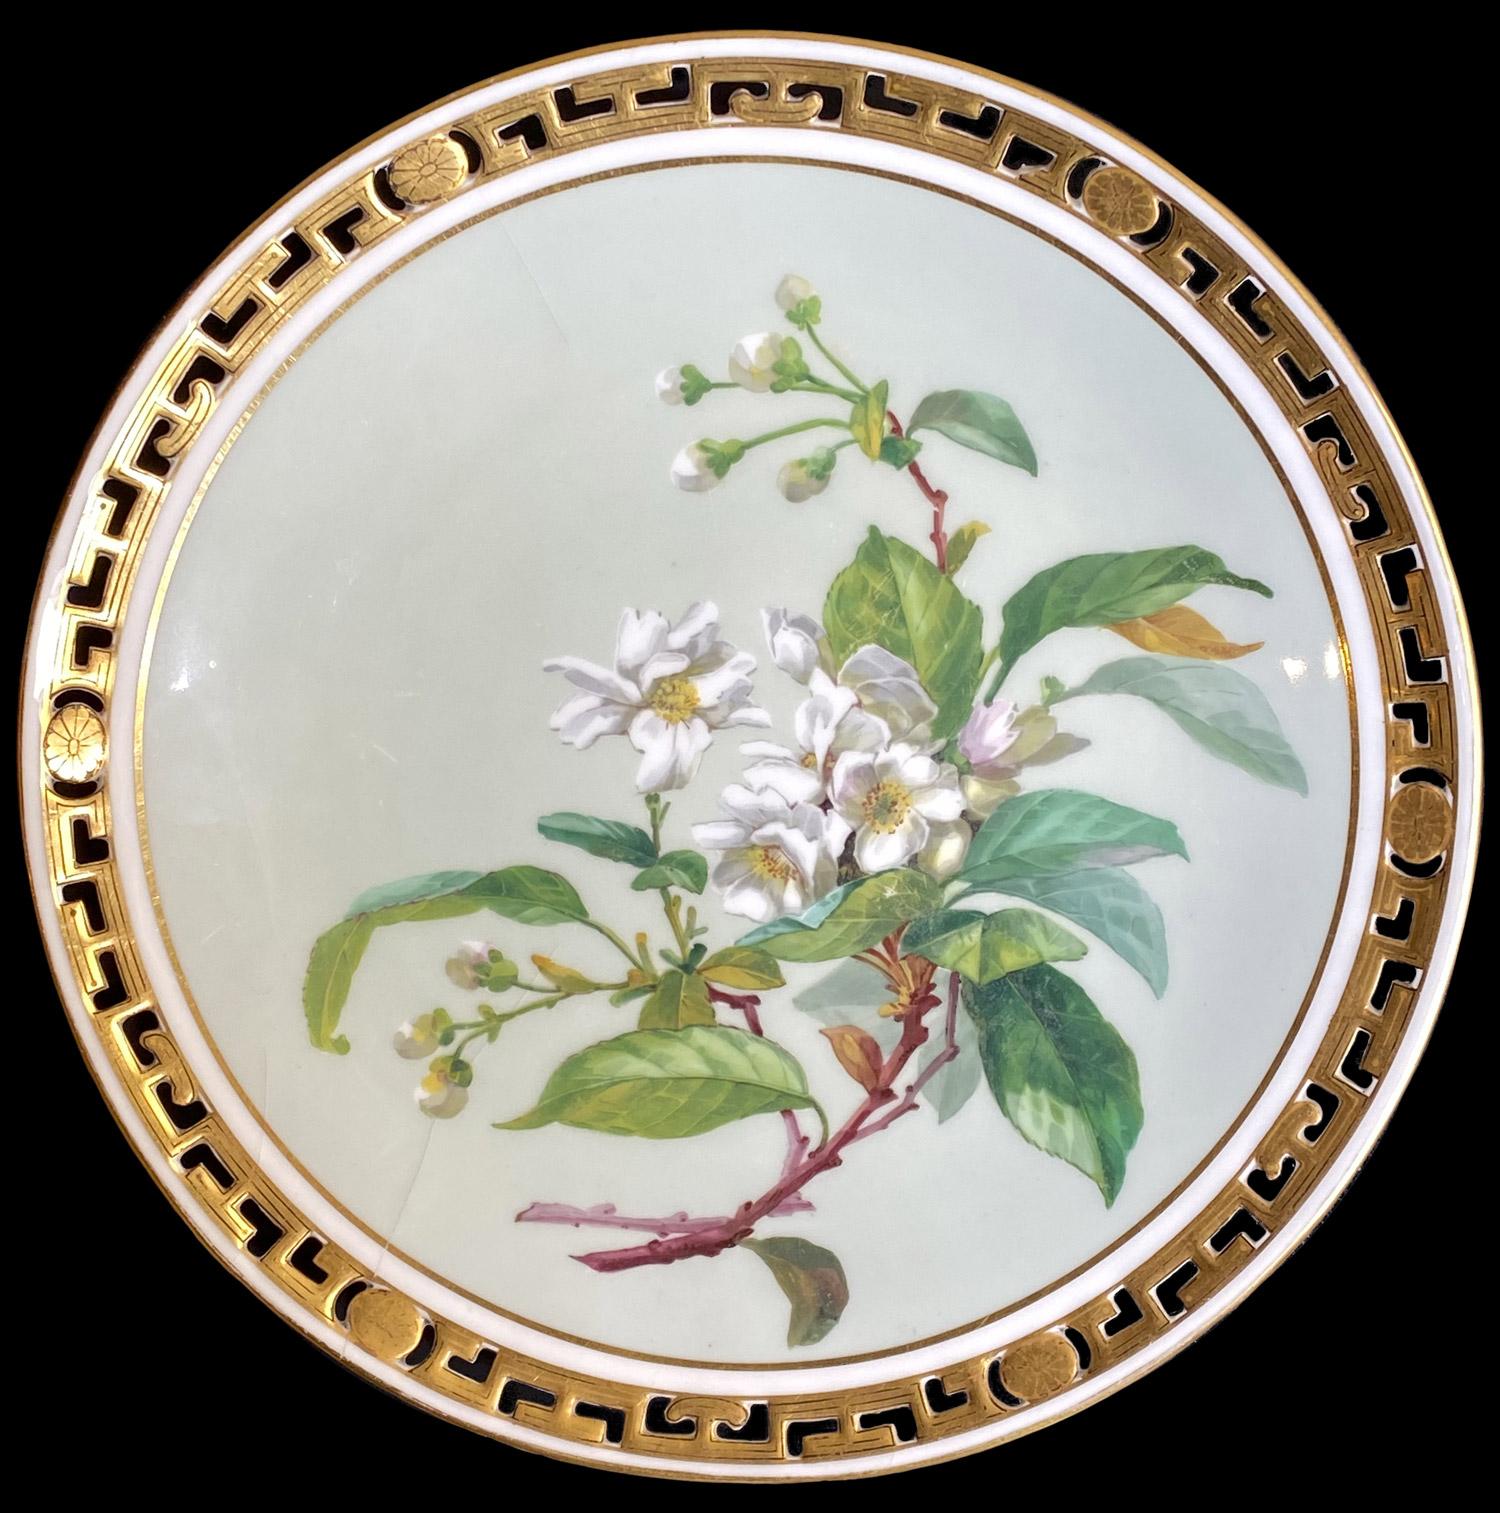 Gilt 11 Dinner Plates Flowers and Gold, Minton Porcelain, 1874-1884